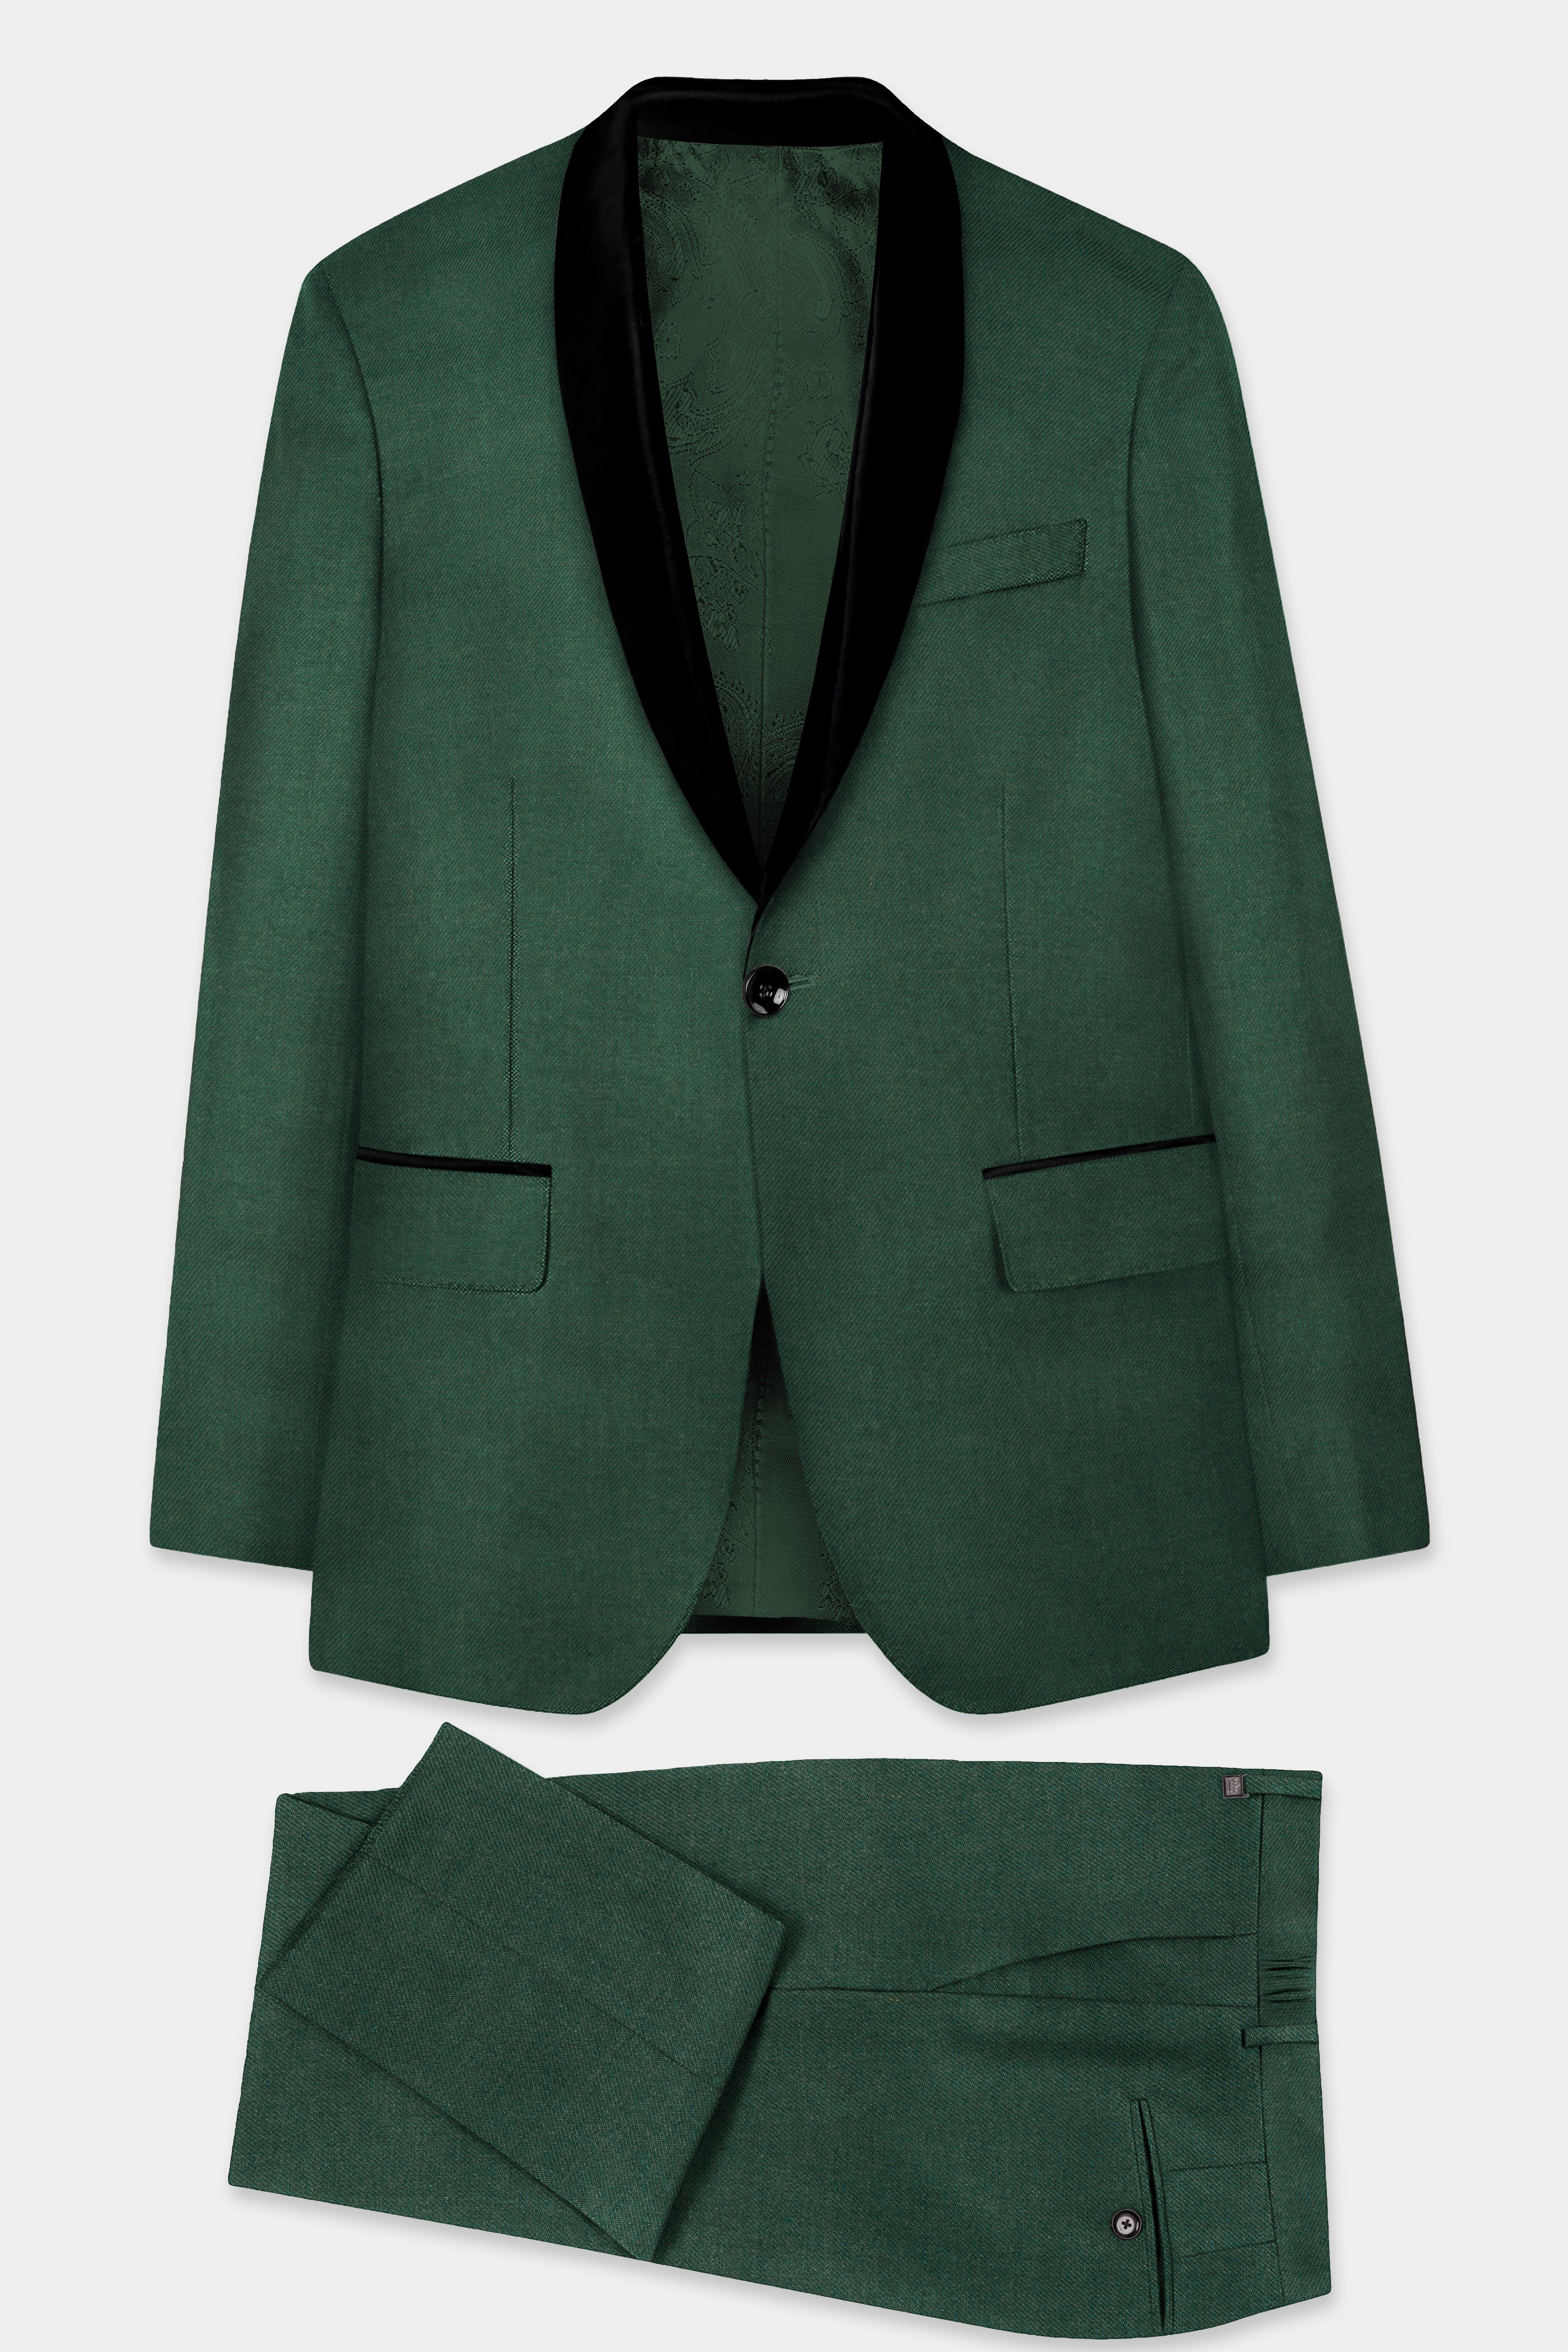 Plantation Green Tweed Tuxedo Suit